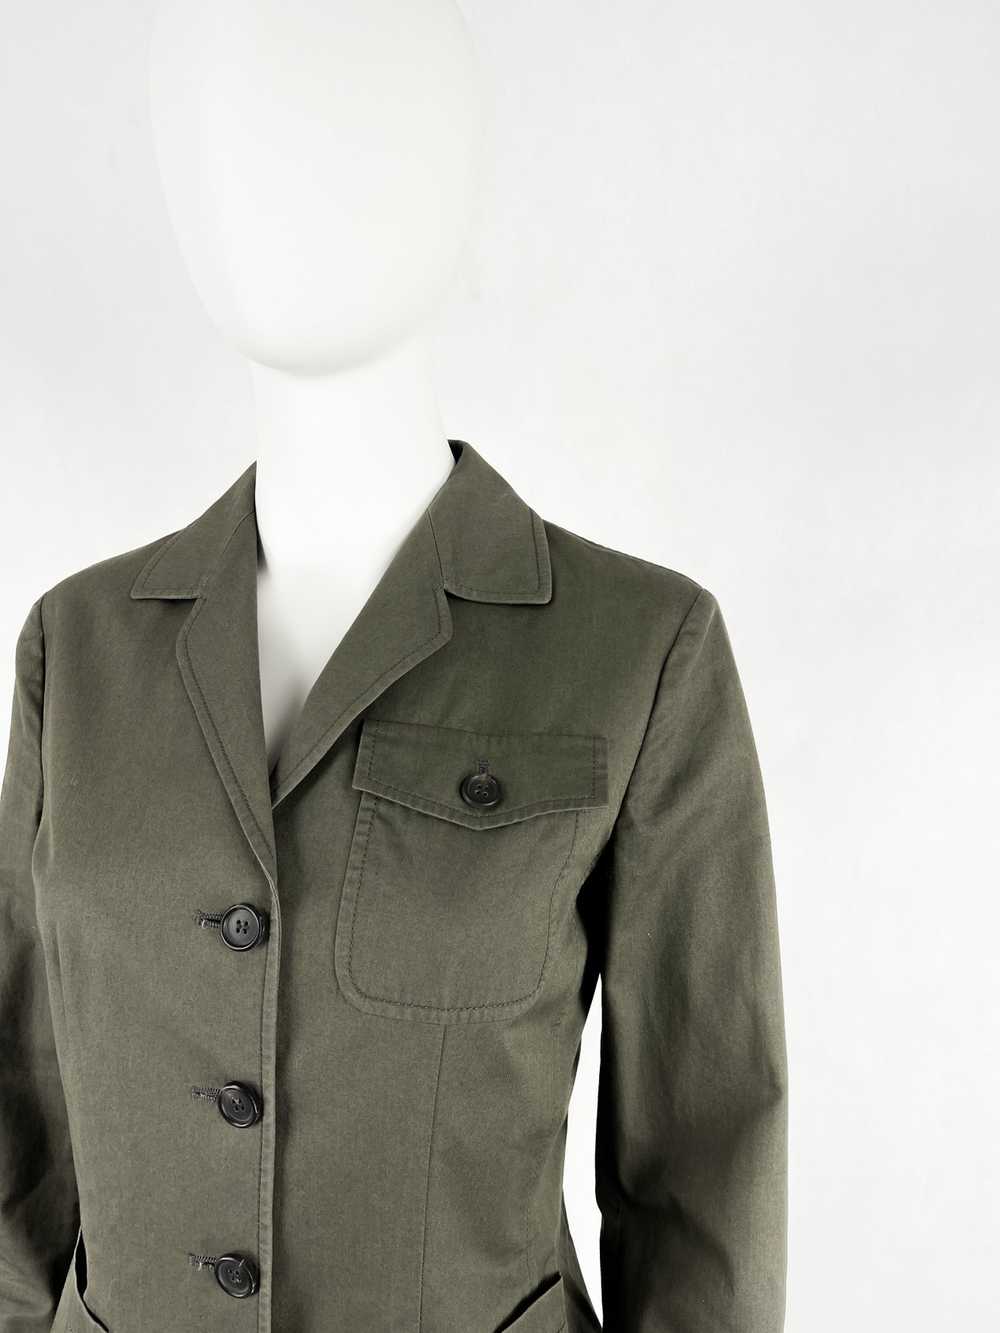 Prada Prada olive green blazer jacket - image 3